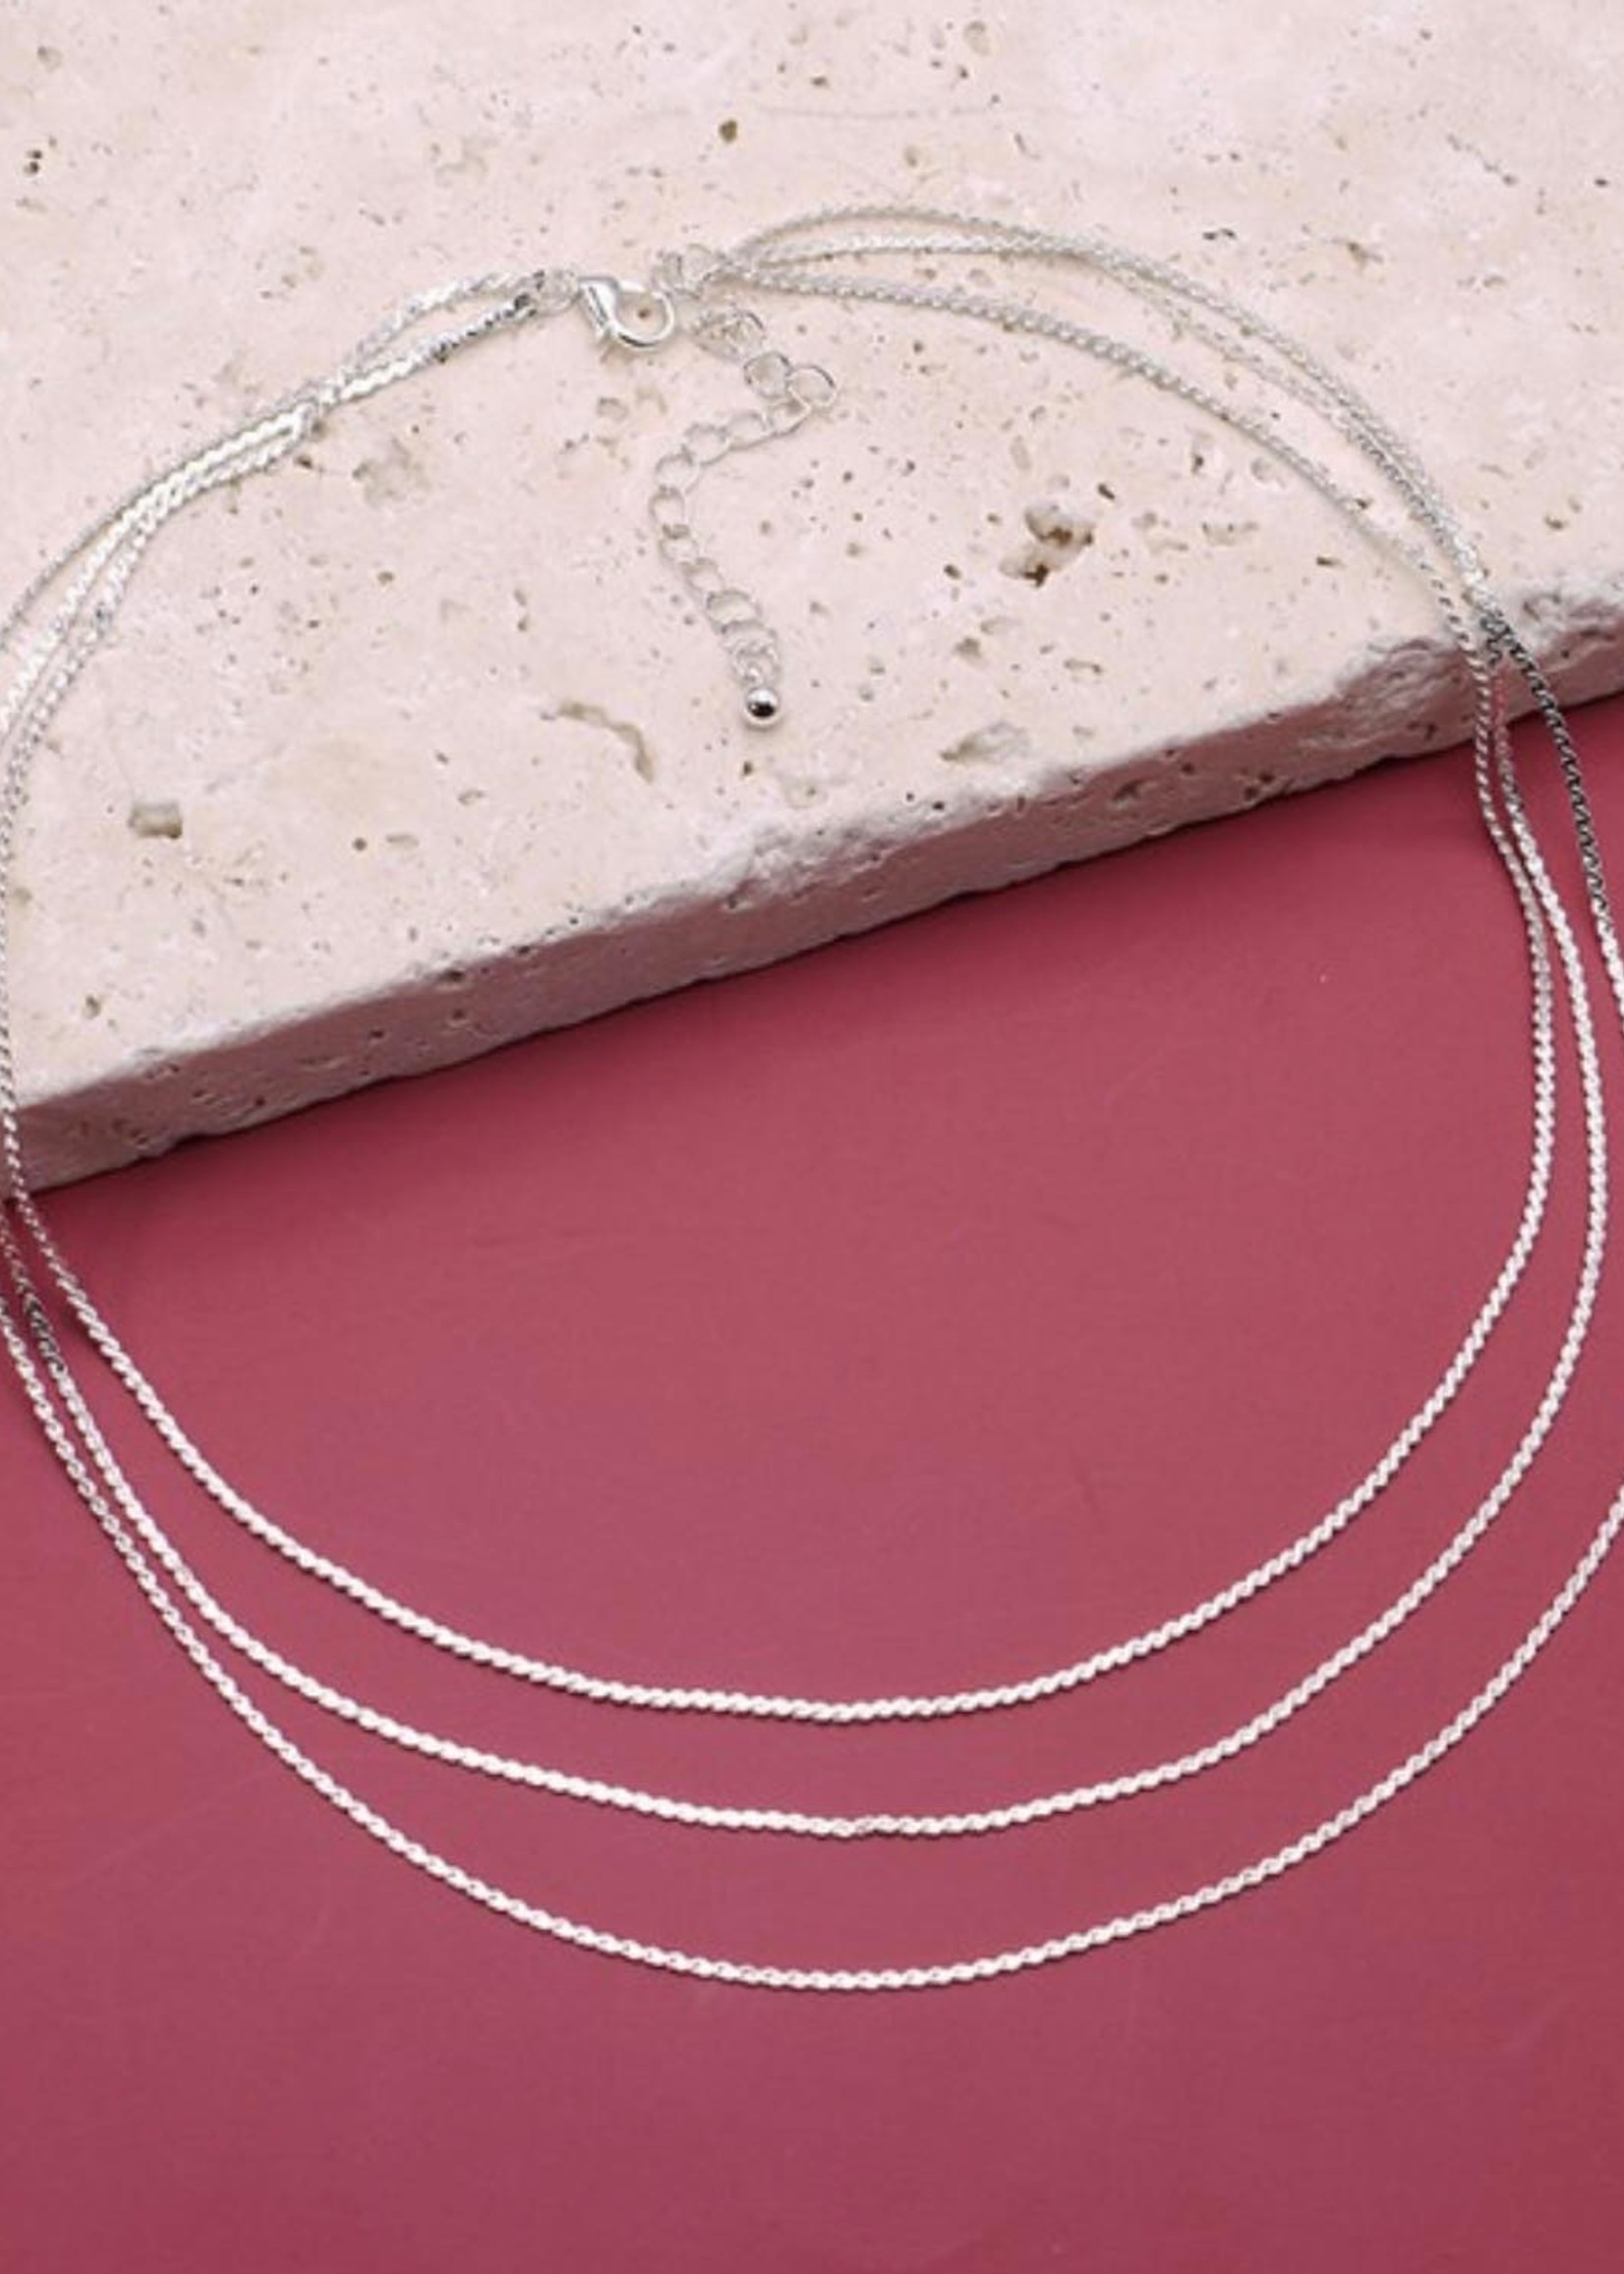 Silver 3 strand chain necklace